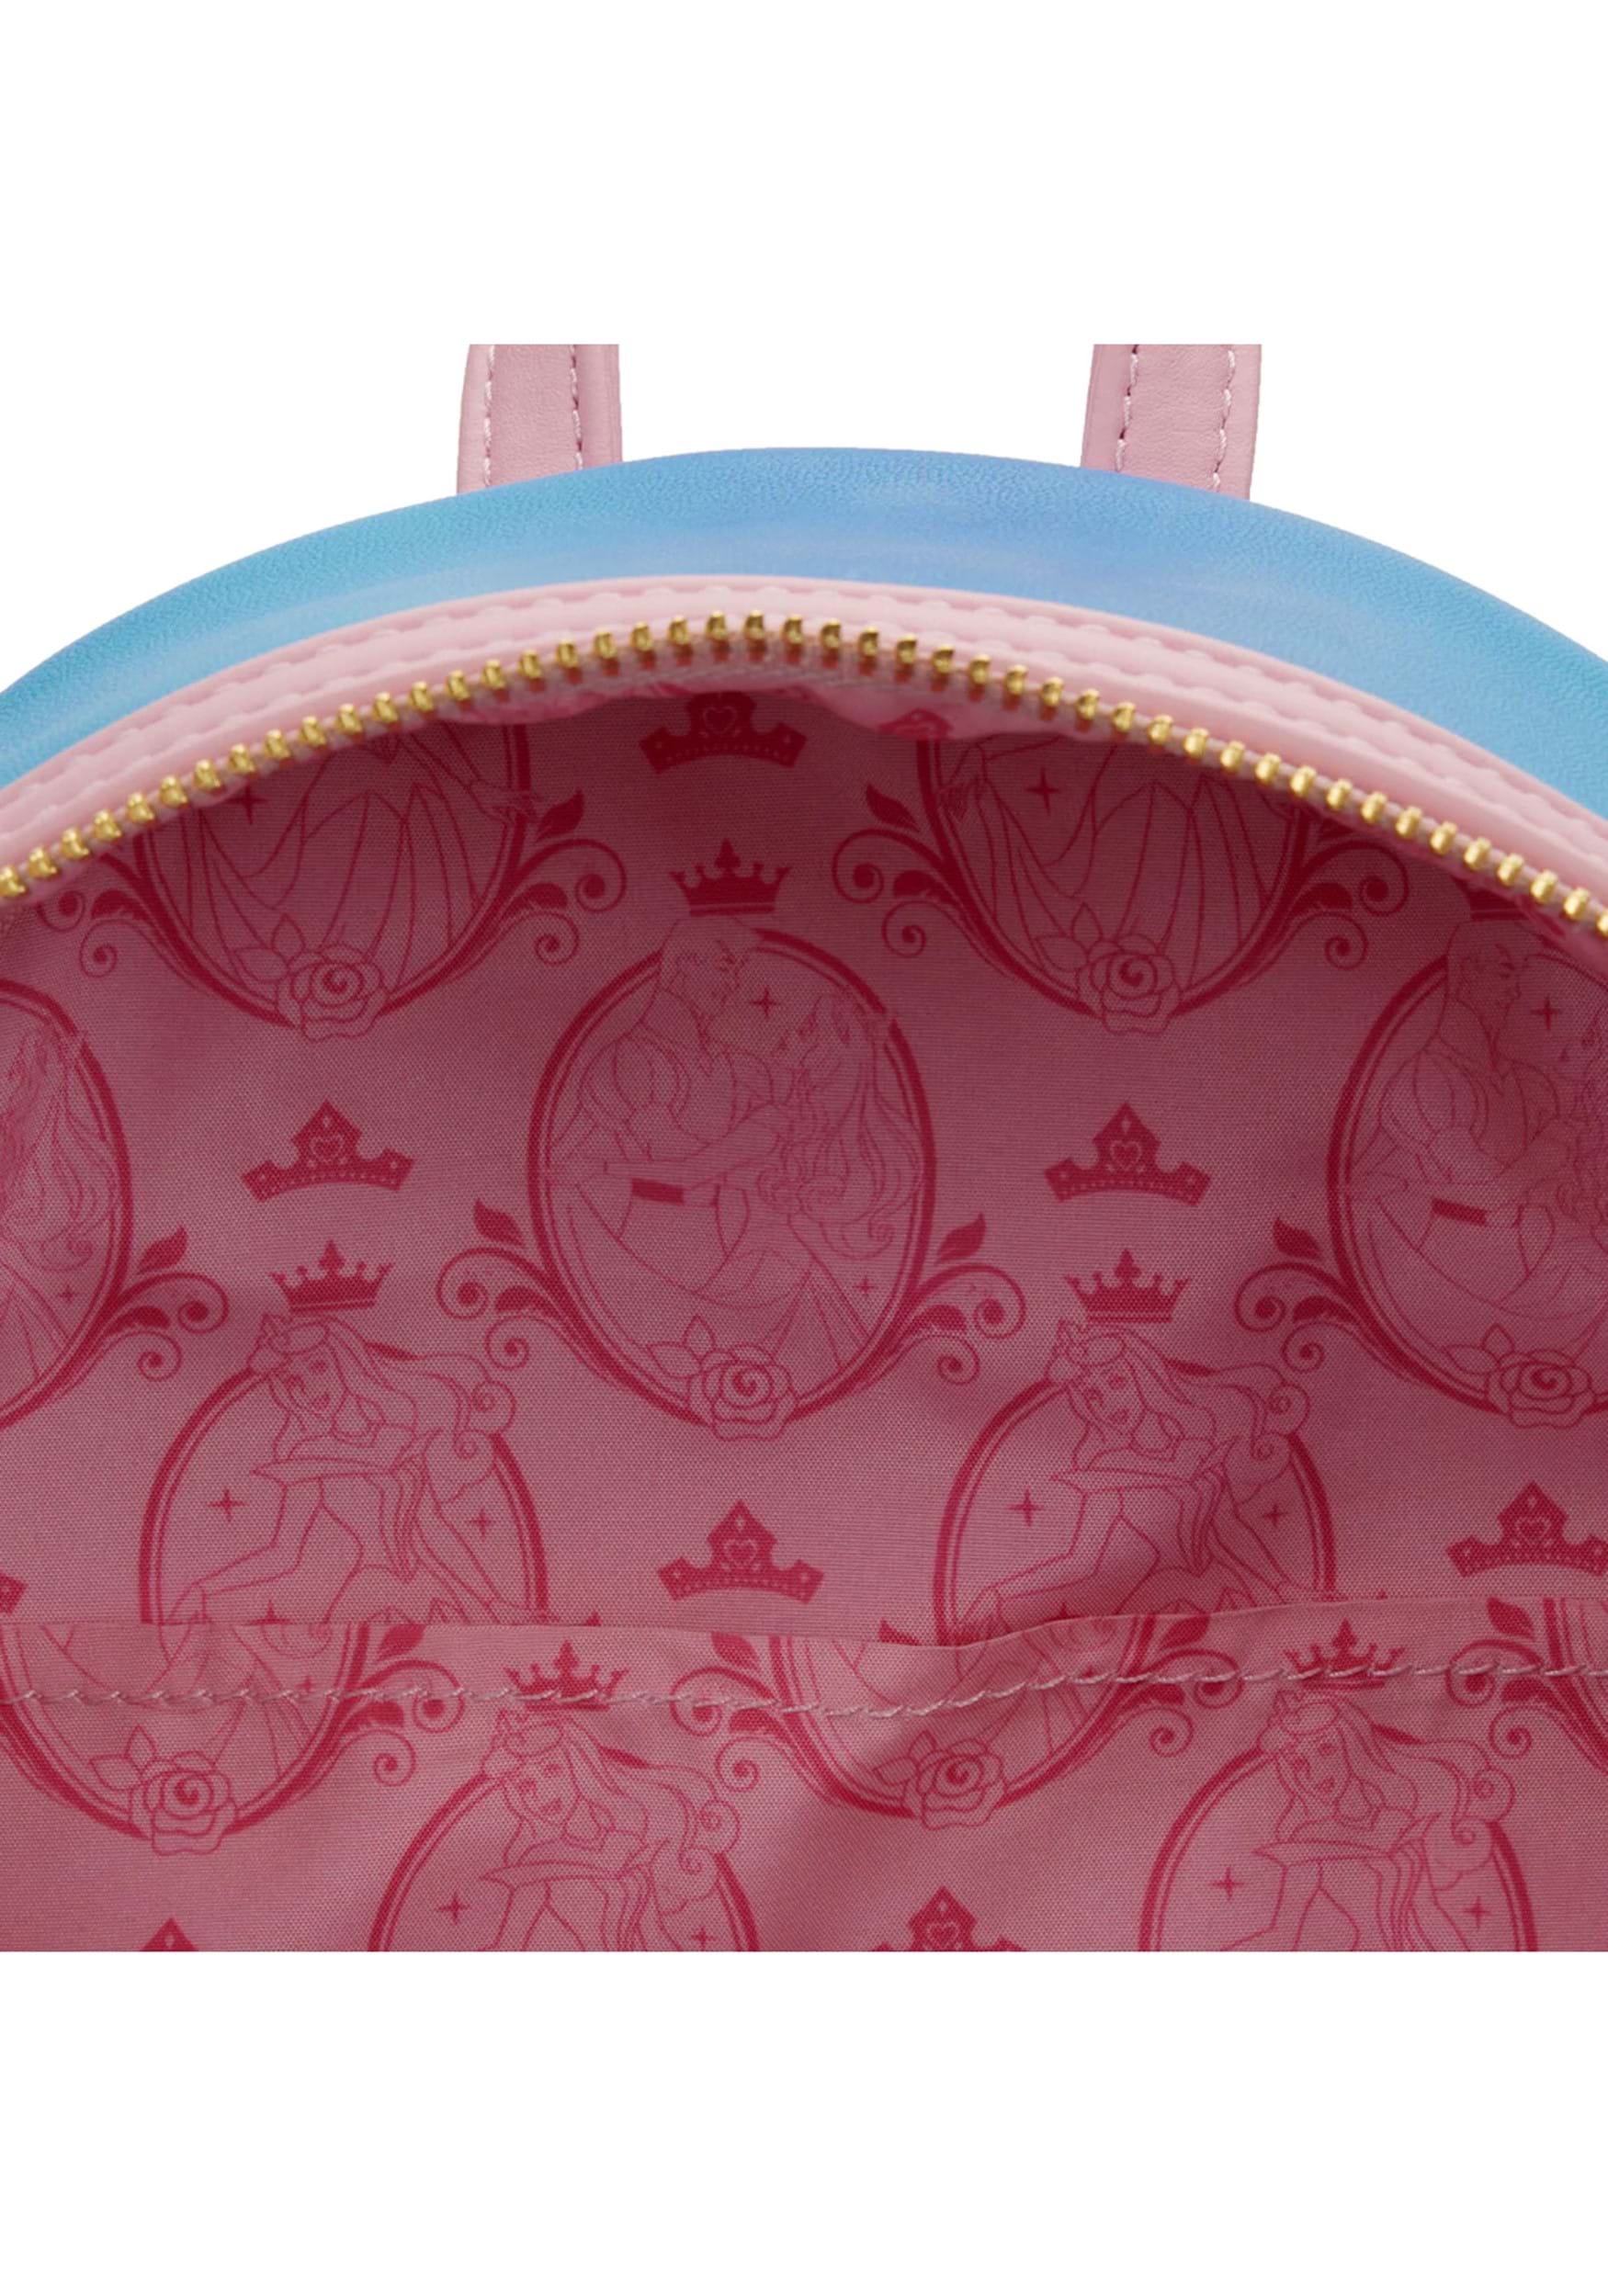 Loungefly Sleeping Beauty Mini Backpack & Wallet  Disney princess  backpack, Loungefly bag, Loungefly disney